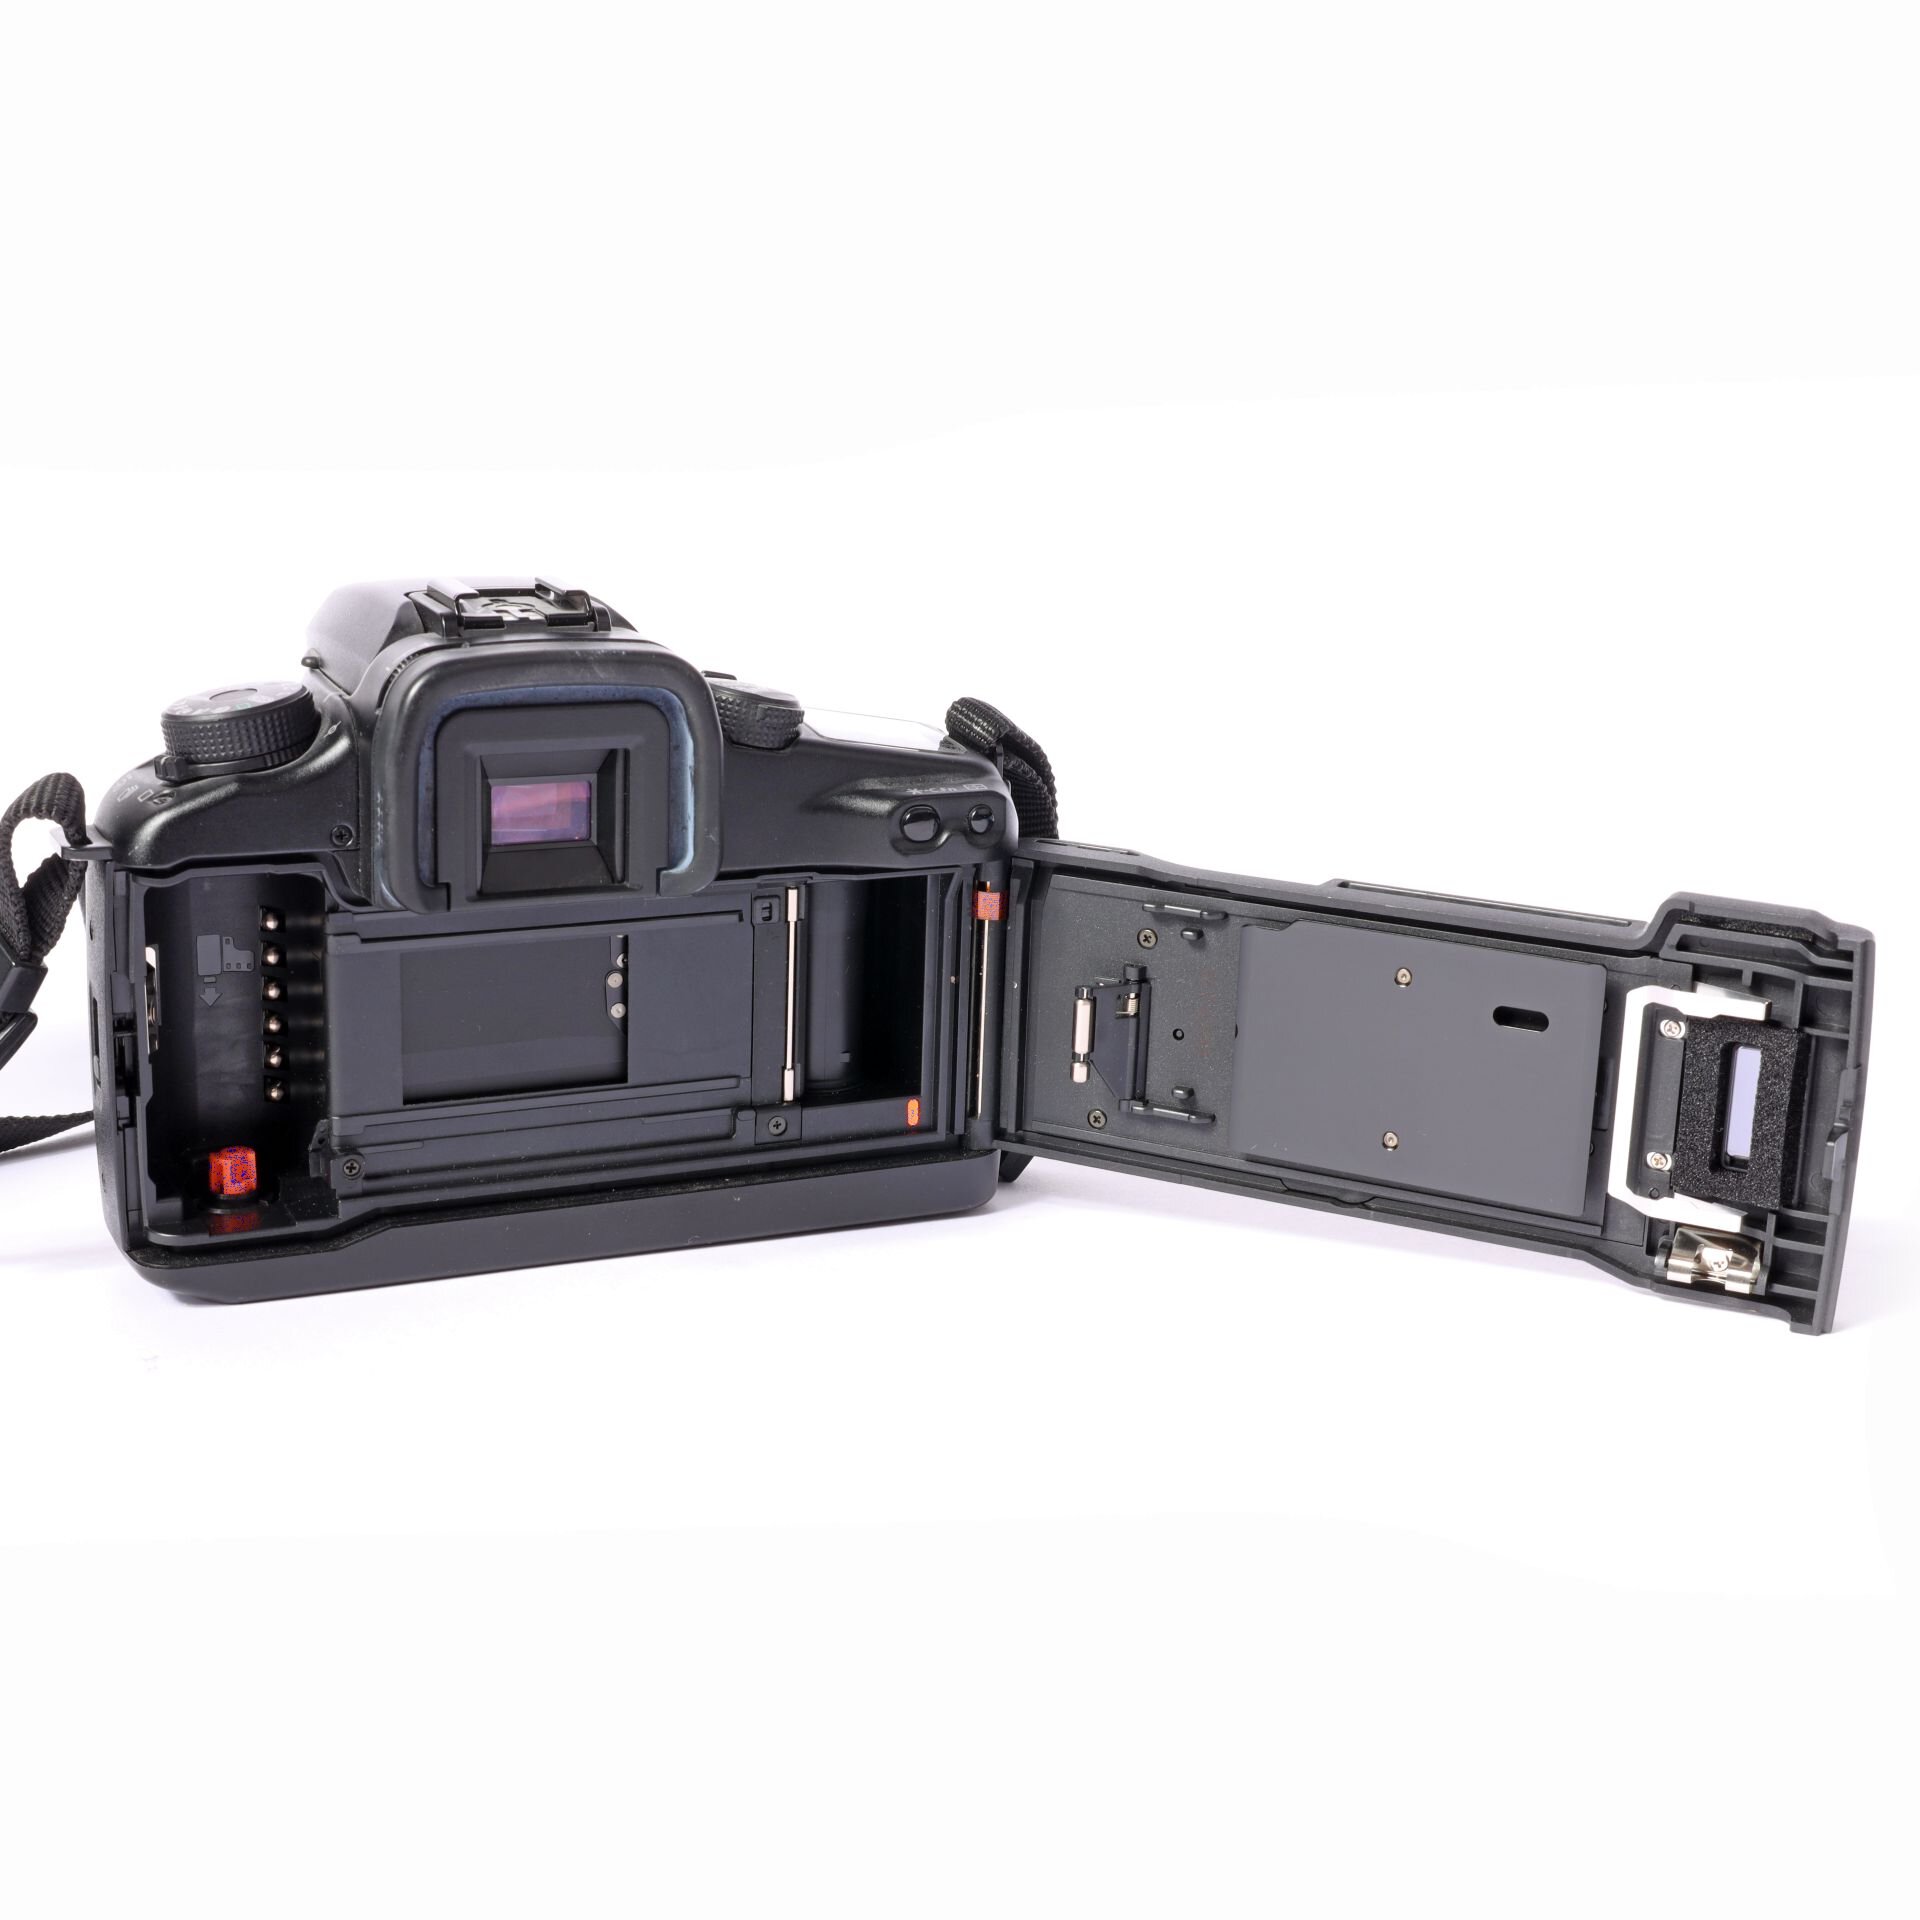 Canon EOS 40D & EOS 30 Konovlute NOTTESTED